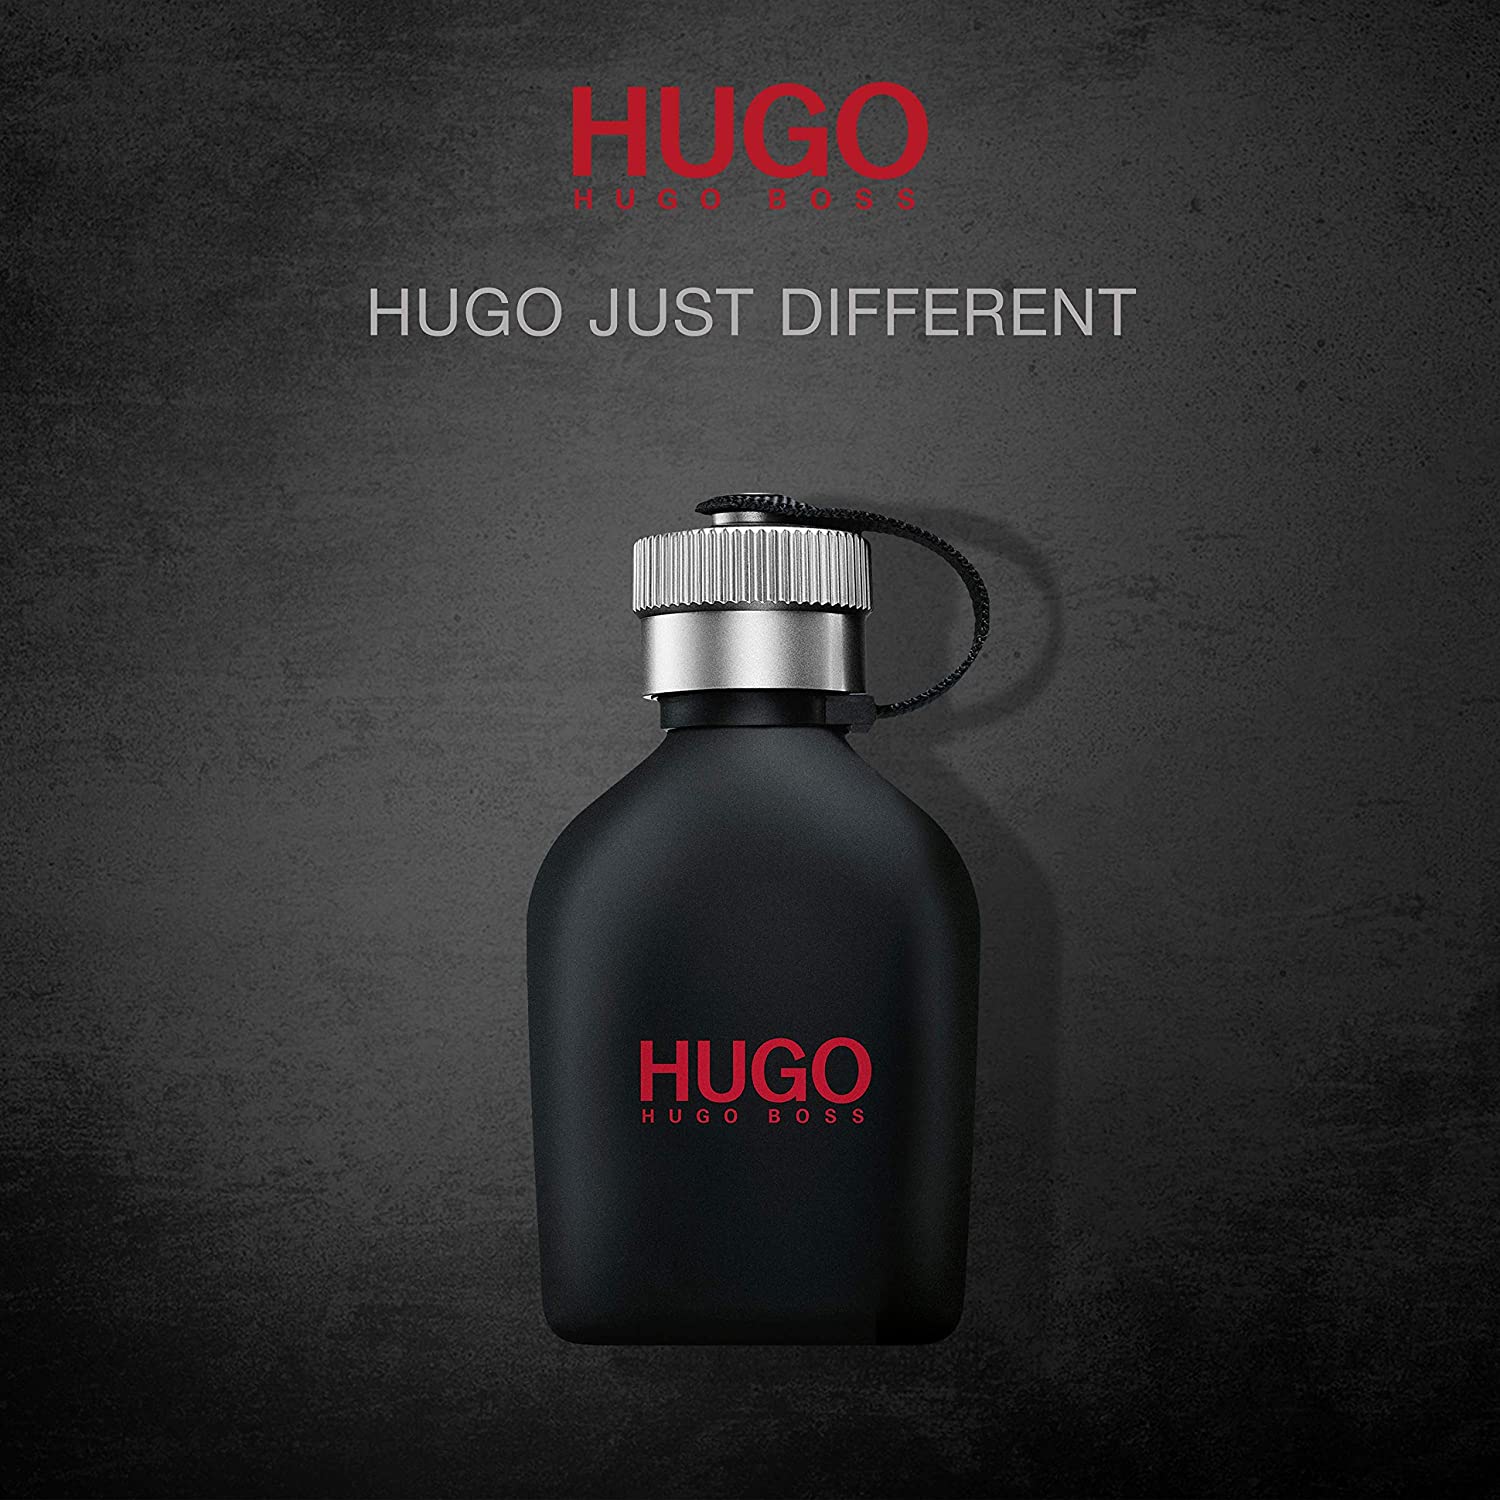 Hugo Boss Hugo Just Different EDT | My Perfume Shop Australia